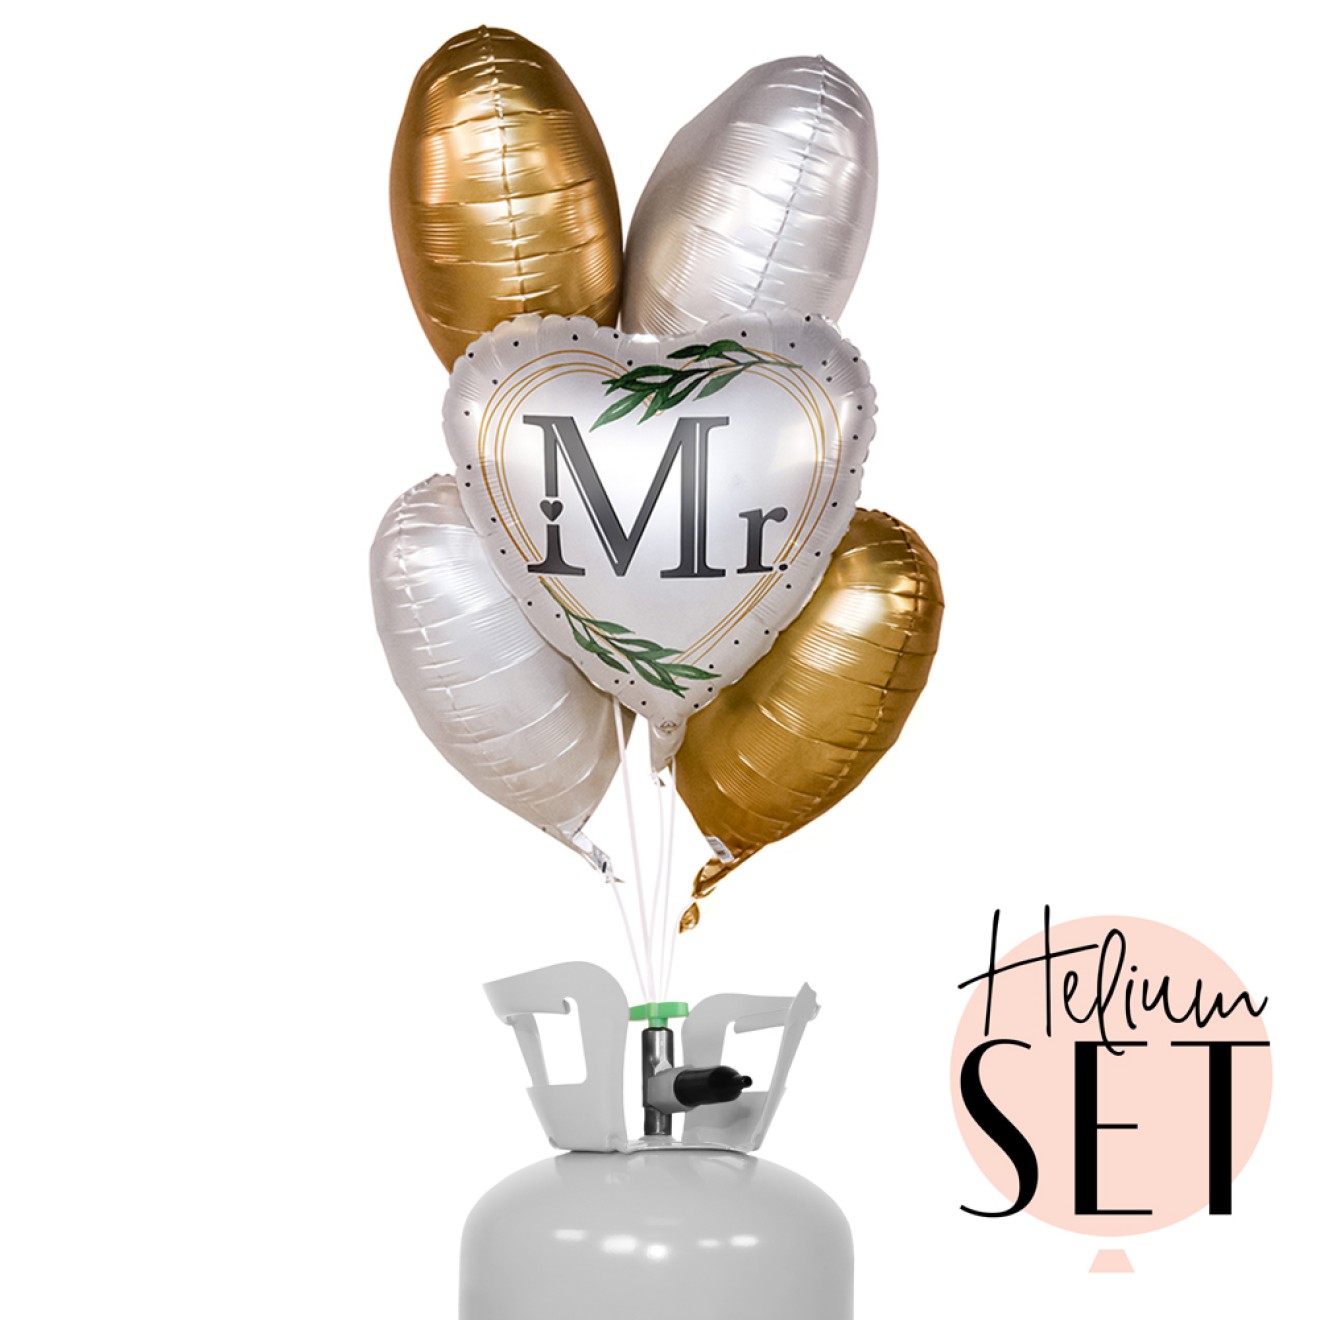 Helium Set - Mr.